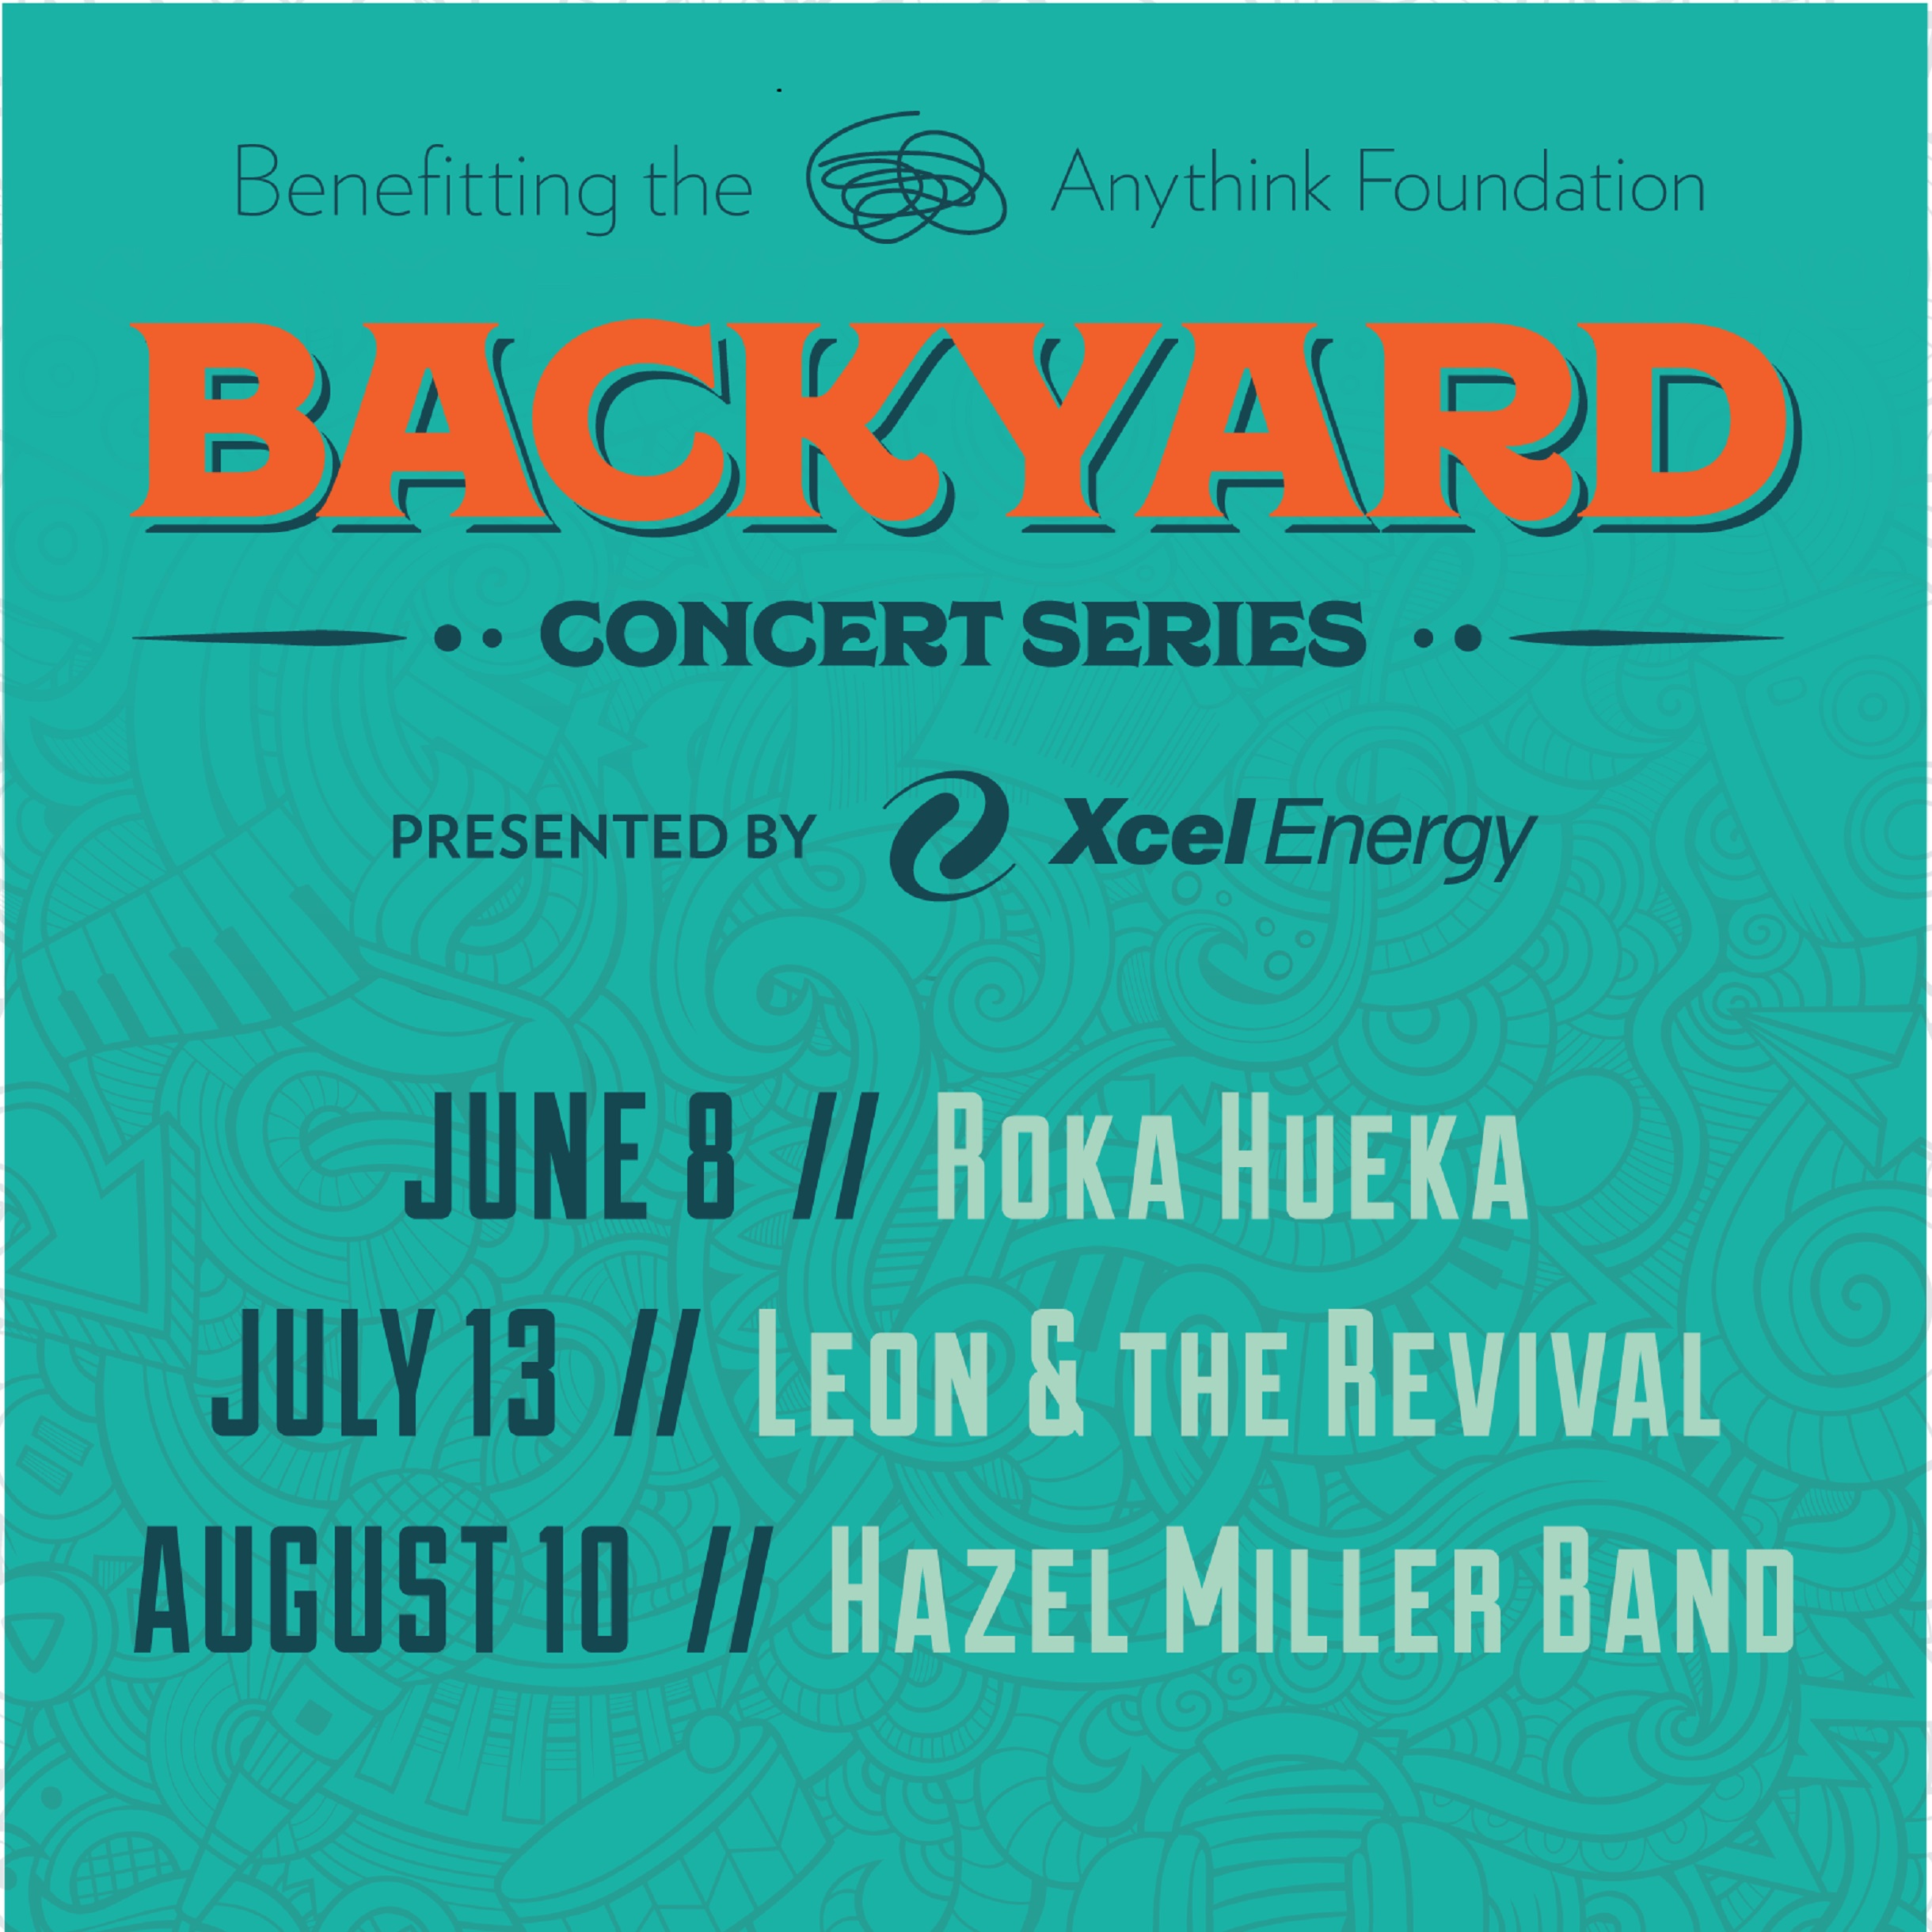 Anythink's Backyard Concert Series returns